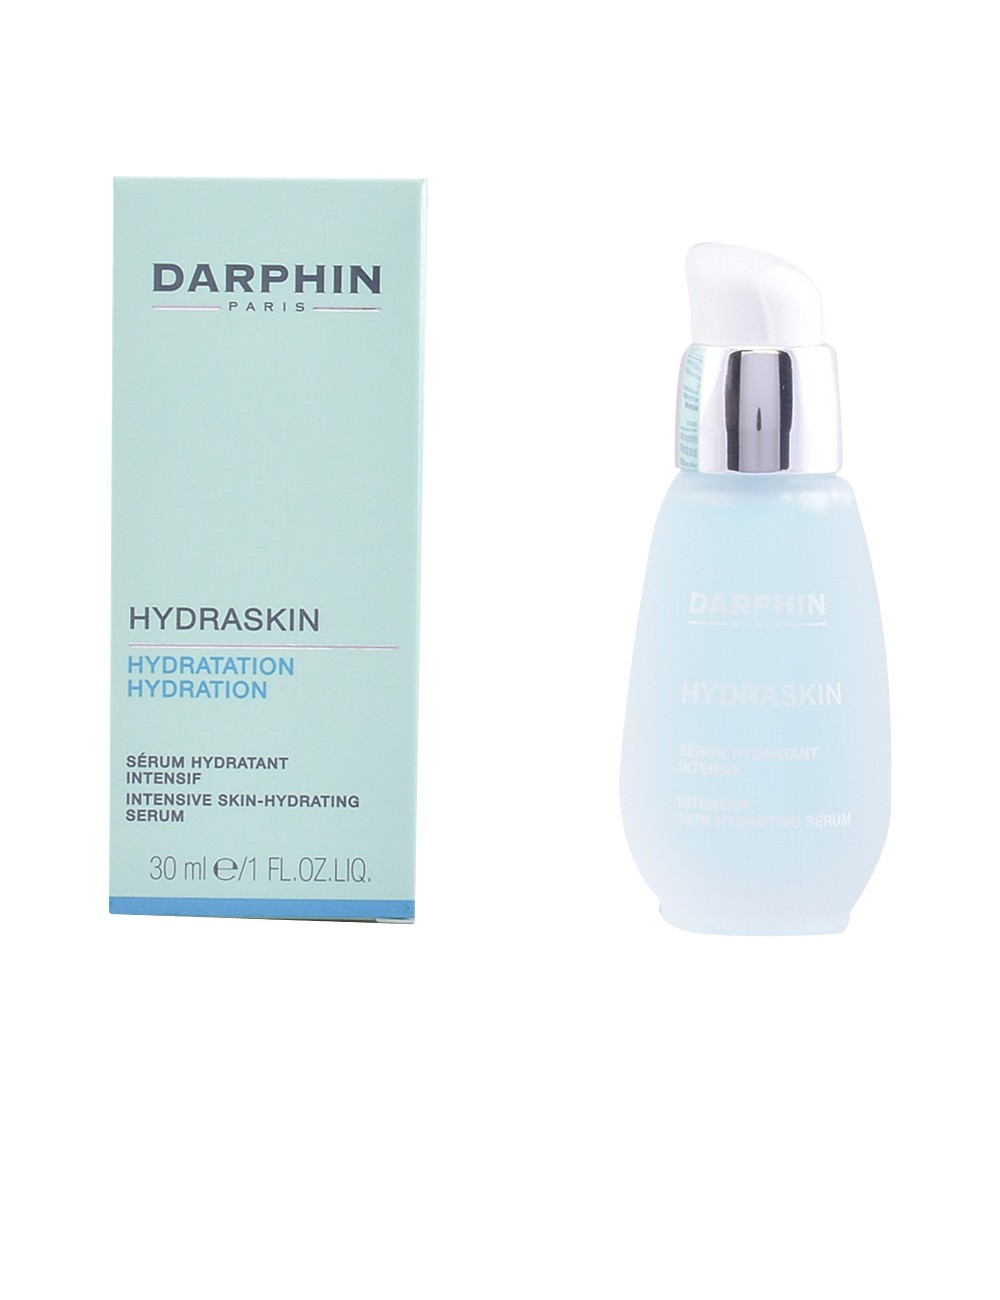 HYDRASKIN intensive skin-sérum hydratant 30 ml